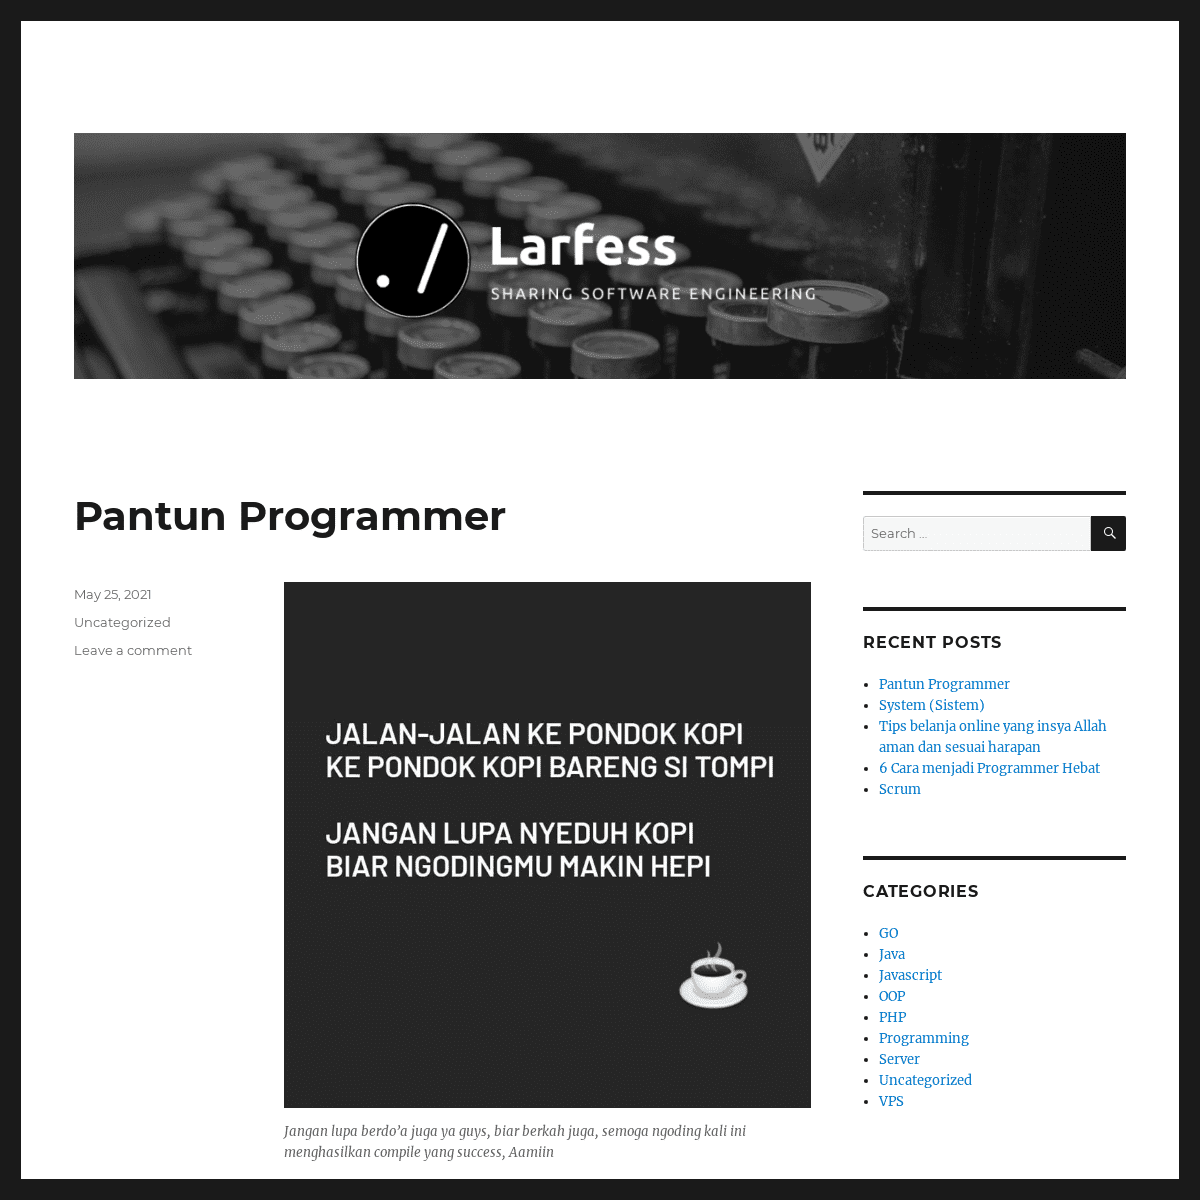 A complete backup of https://larfess.com